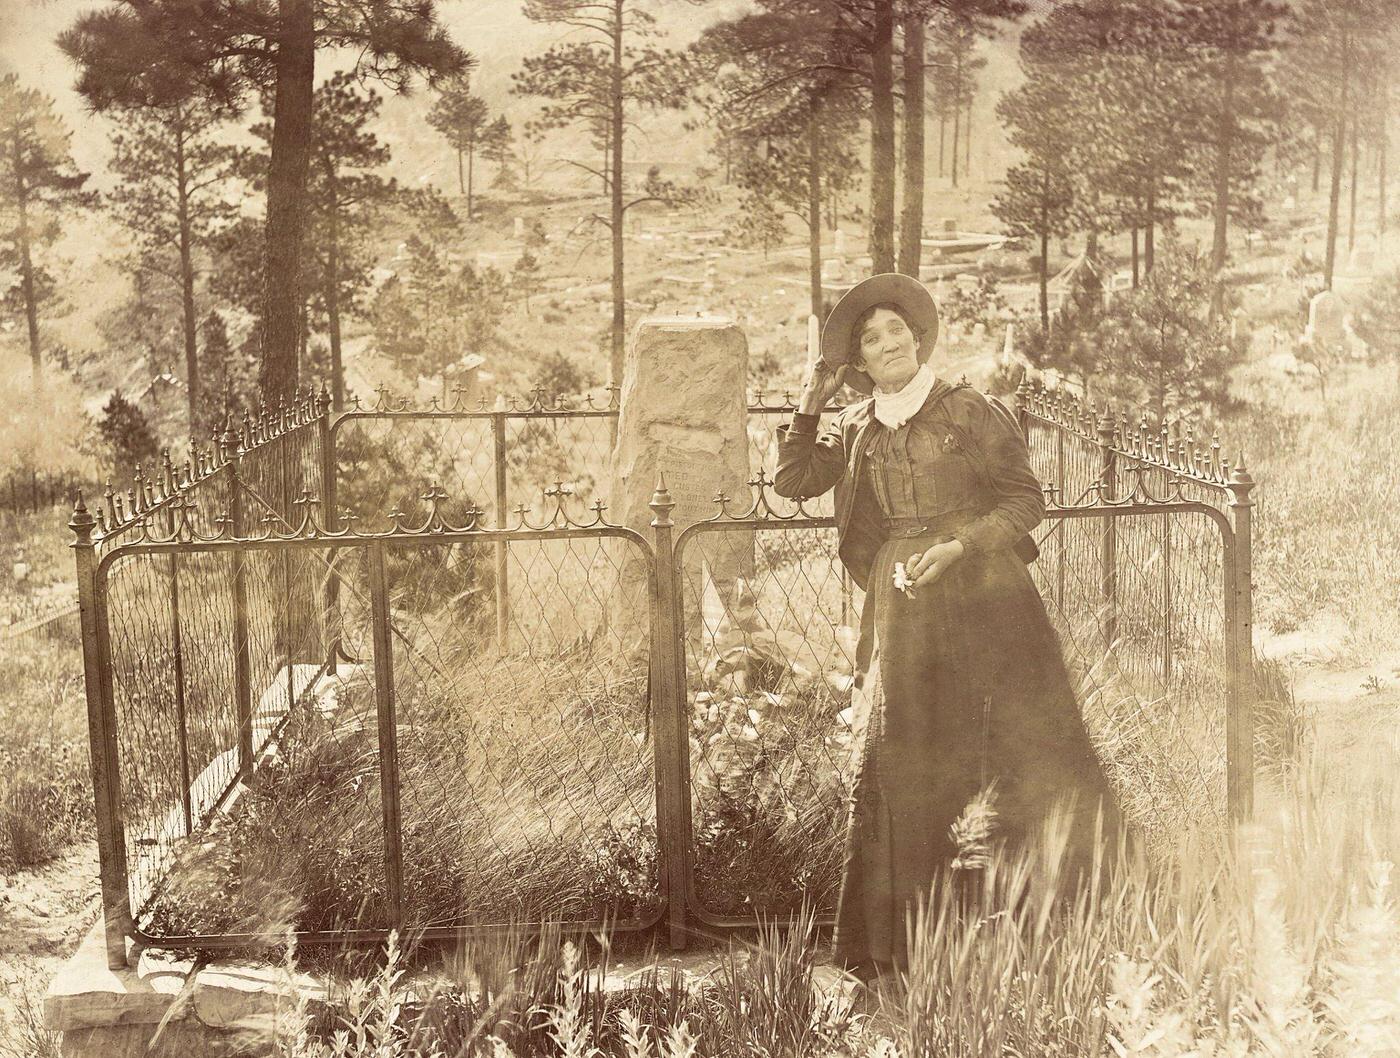 Calamity Jane at the Grave of Wild Bill Hickok in Deadwood, South Dakota